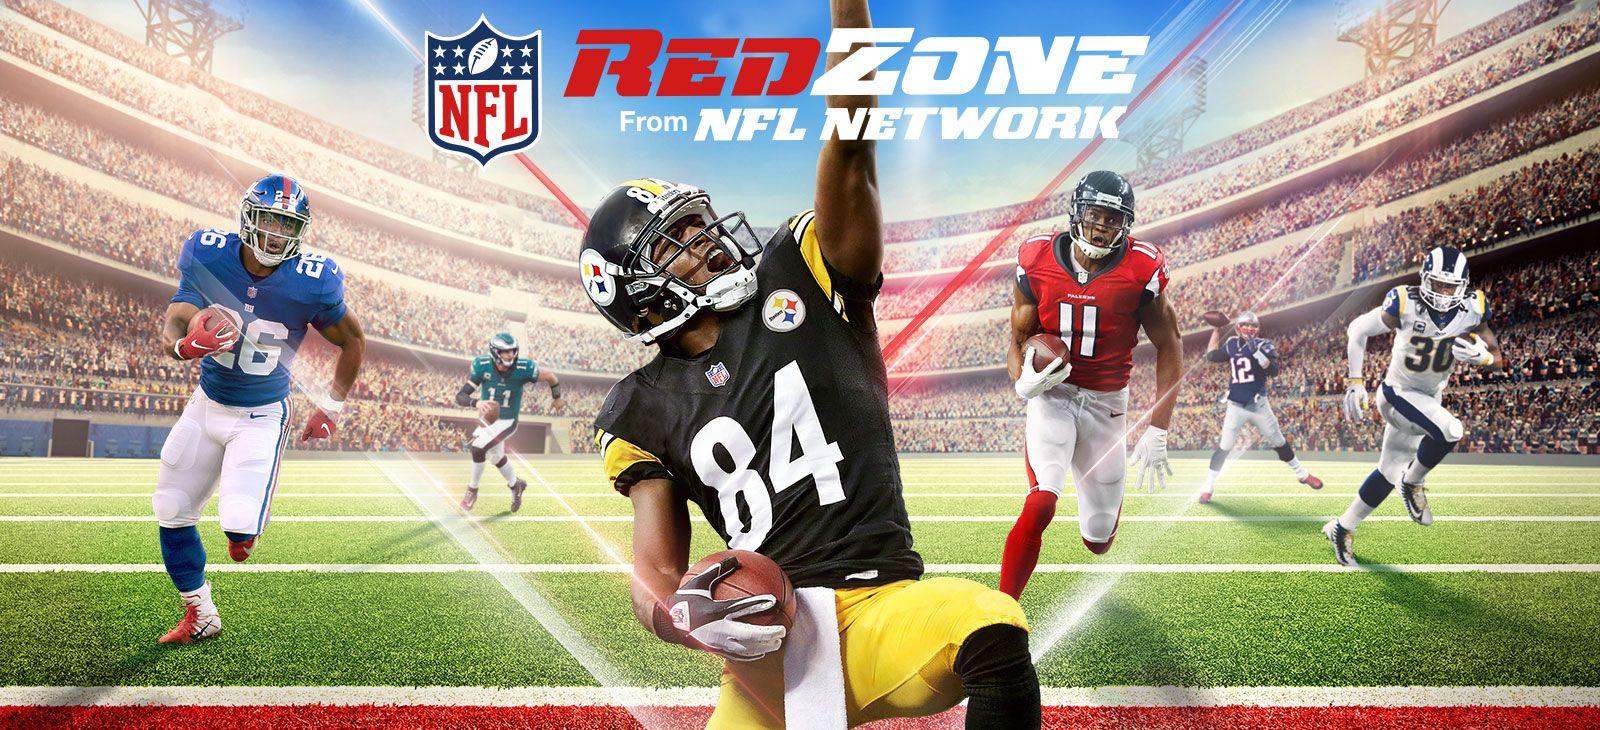 NFL RedZone Logo - NFL RedZone from NFL Network